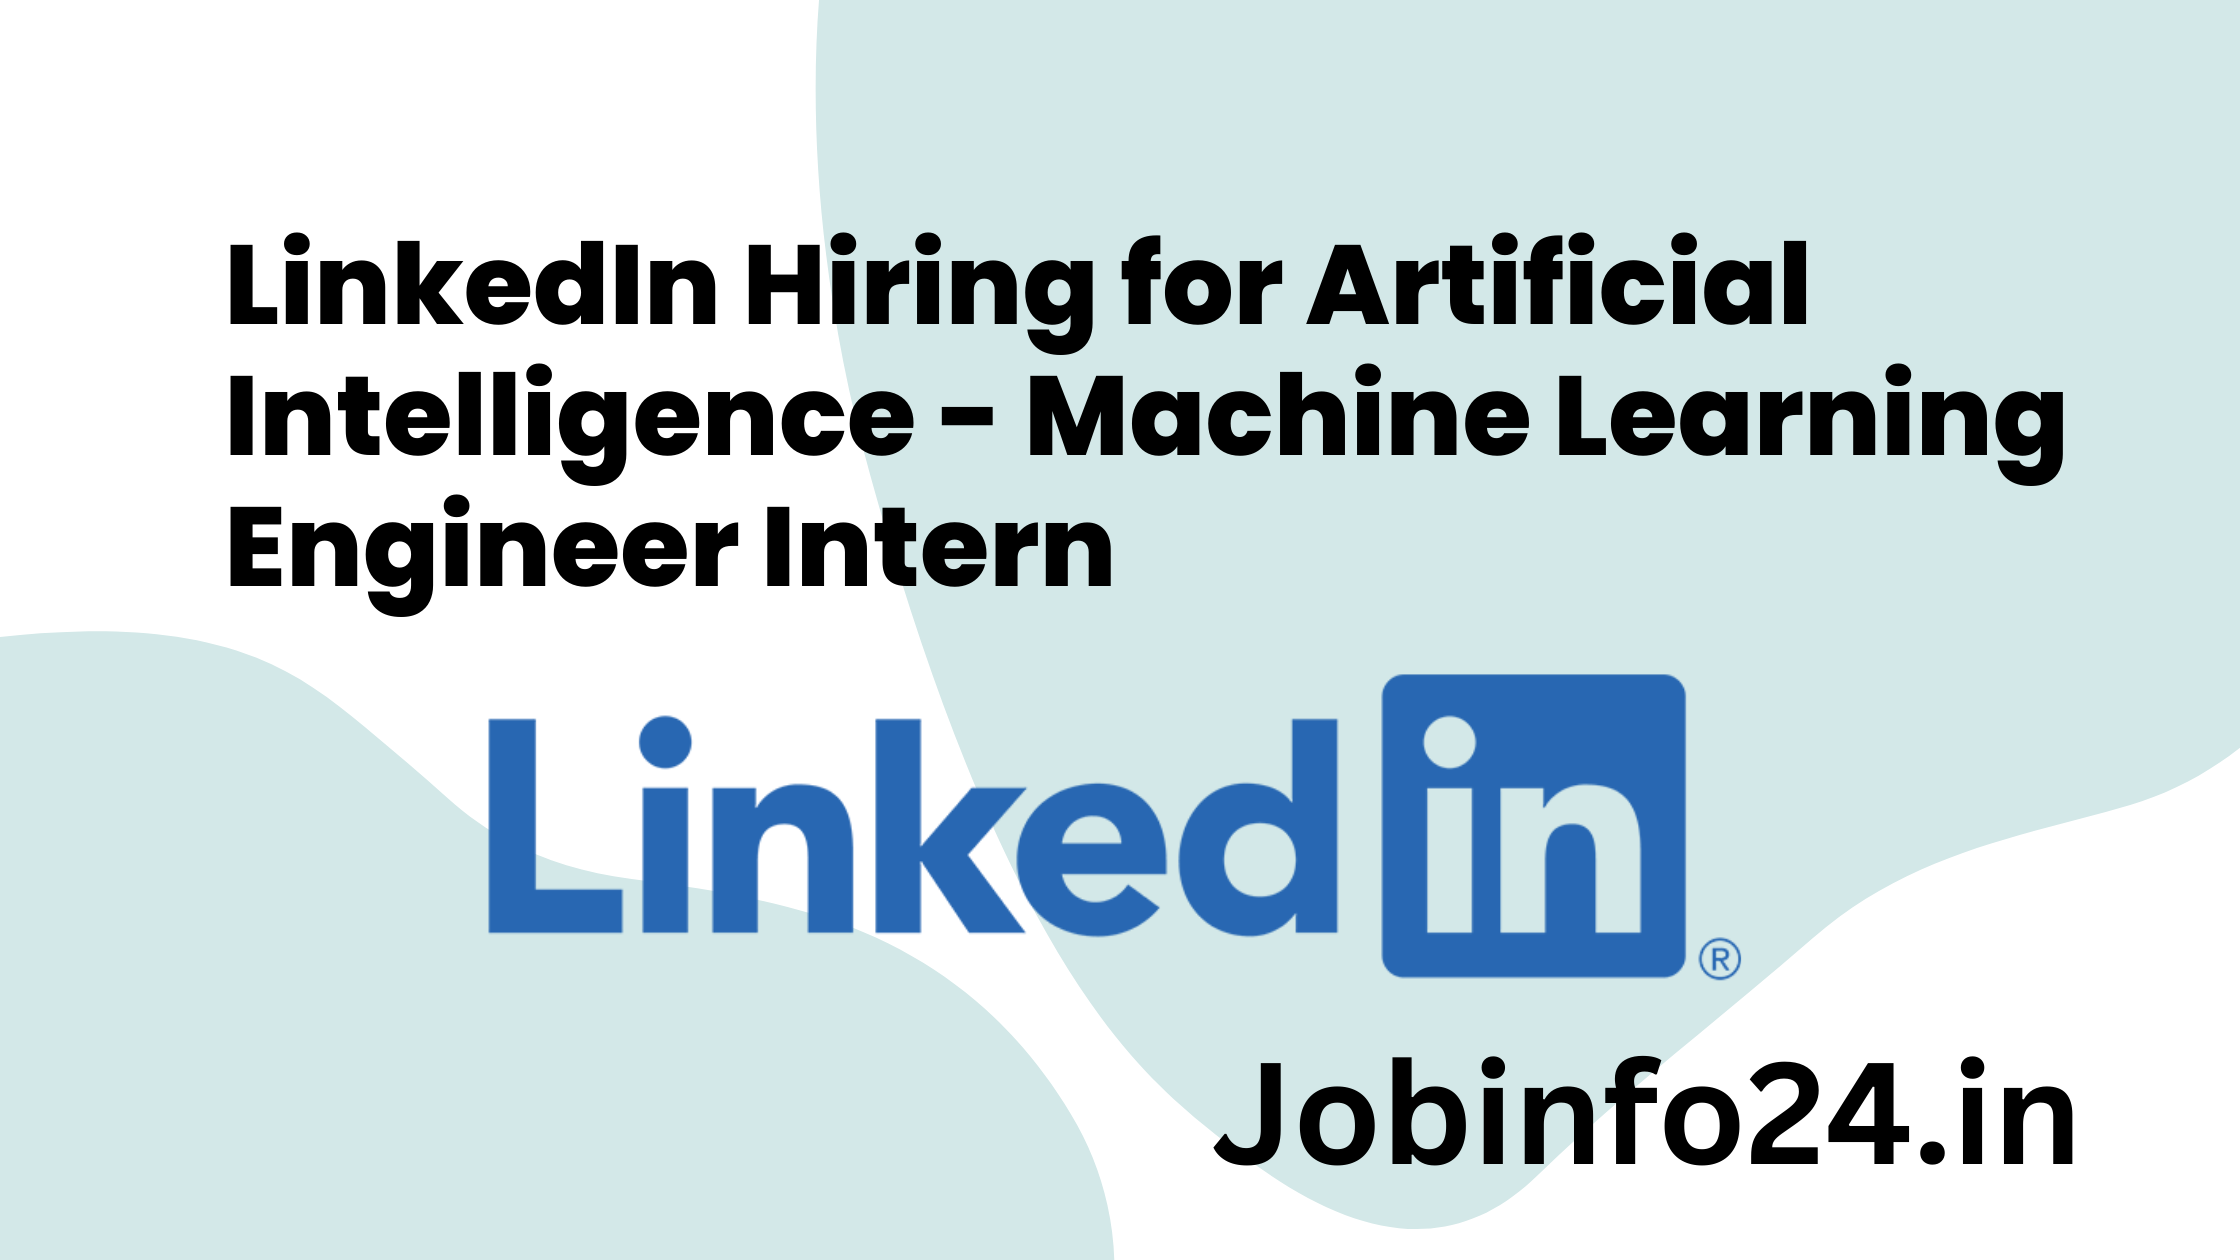 LinkedIn Hiring for Artificial Intelligence - Machine Learning Engineer Intern